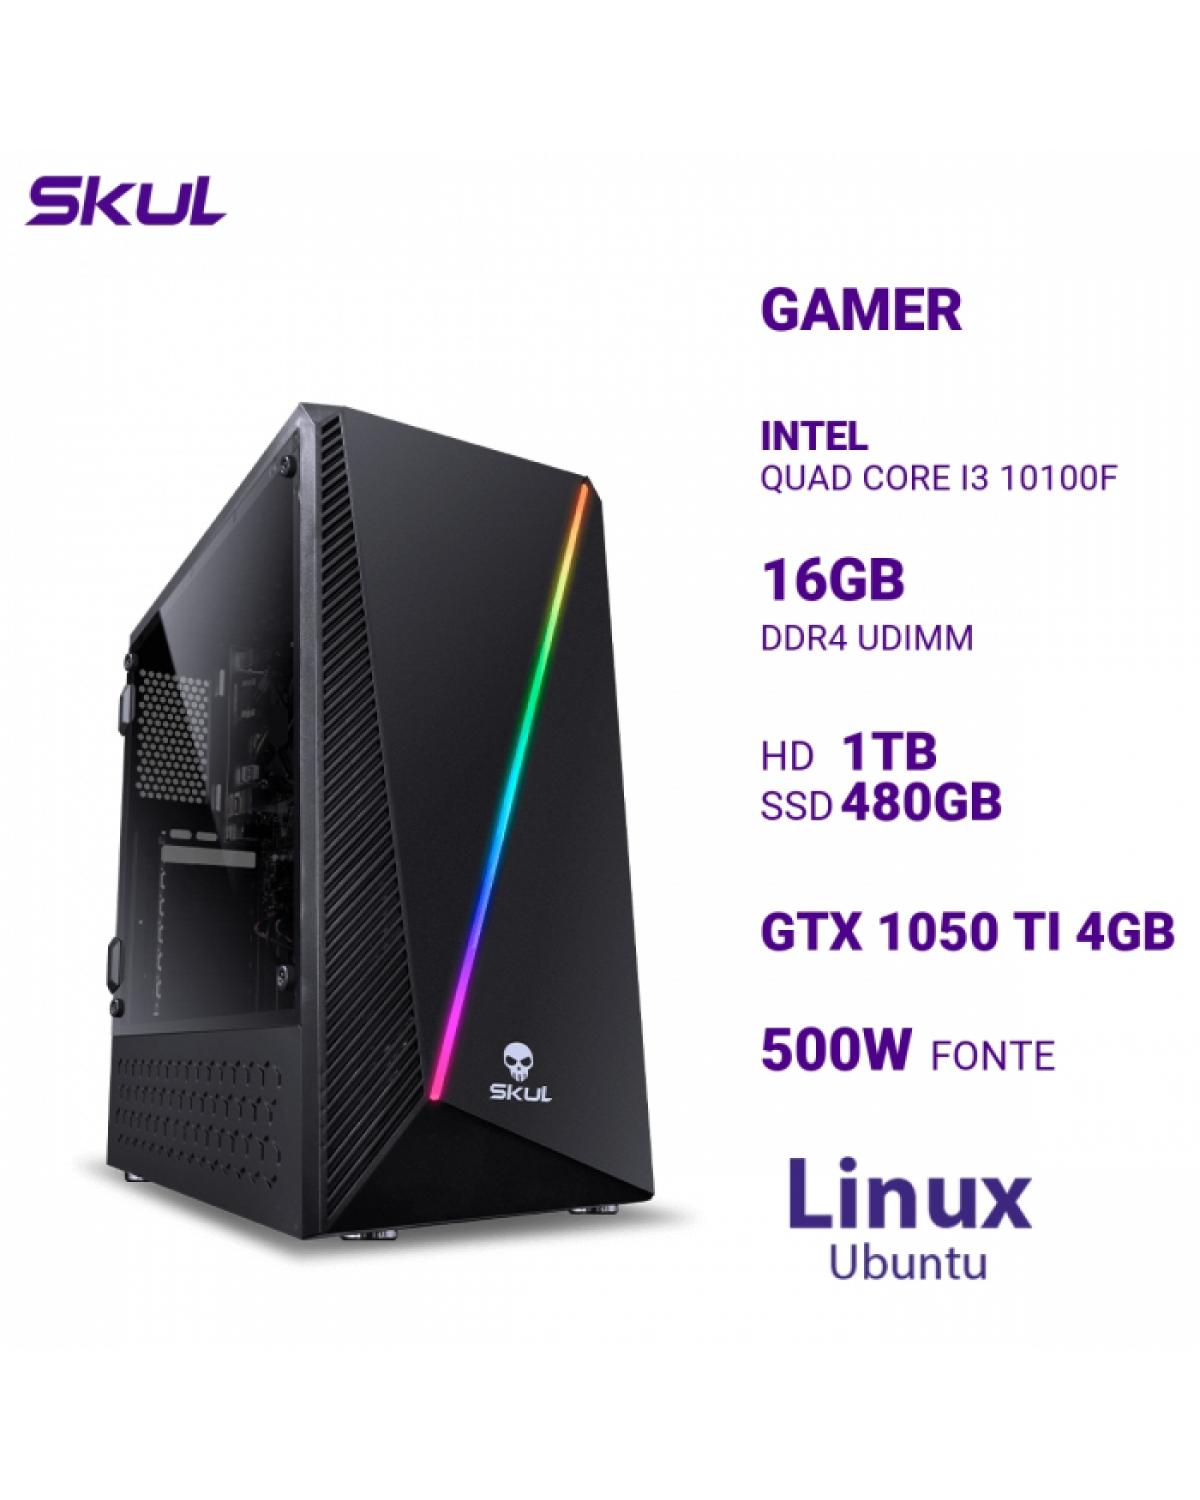 COMPUTADOR GAMER 3000 QUAD CORE I3 10100F MEM 16GB DDR4 HD 1TB SSD 480GB GTX 1050 TI 4GB FONTE 500W LINUX